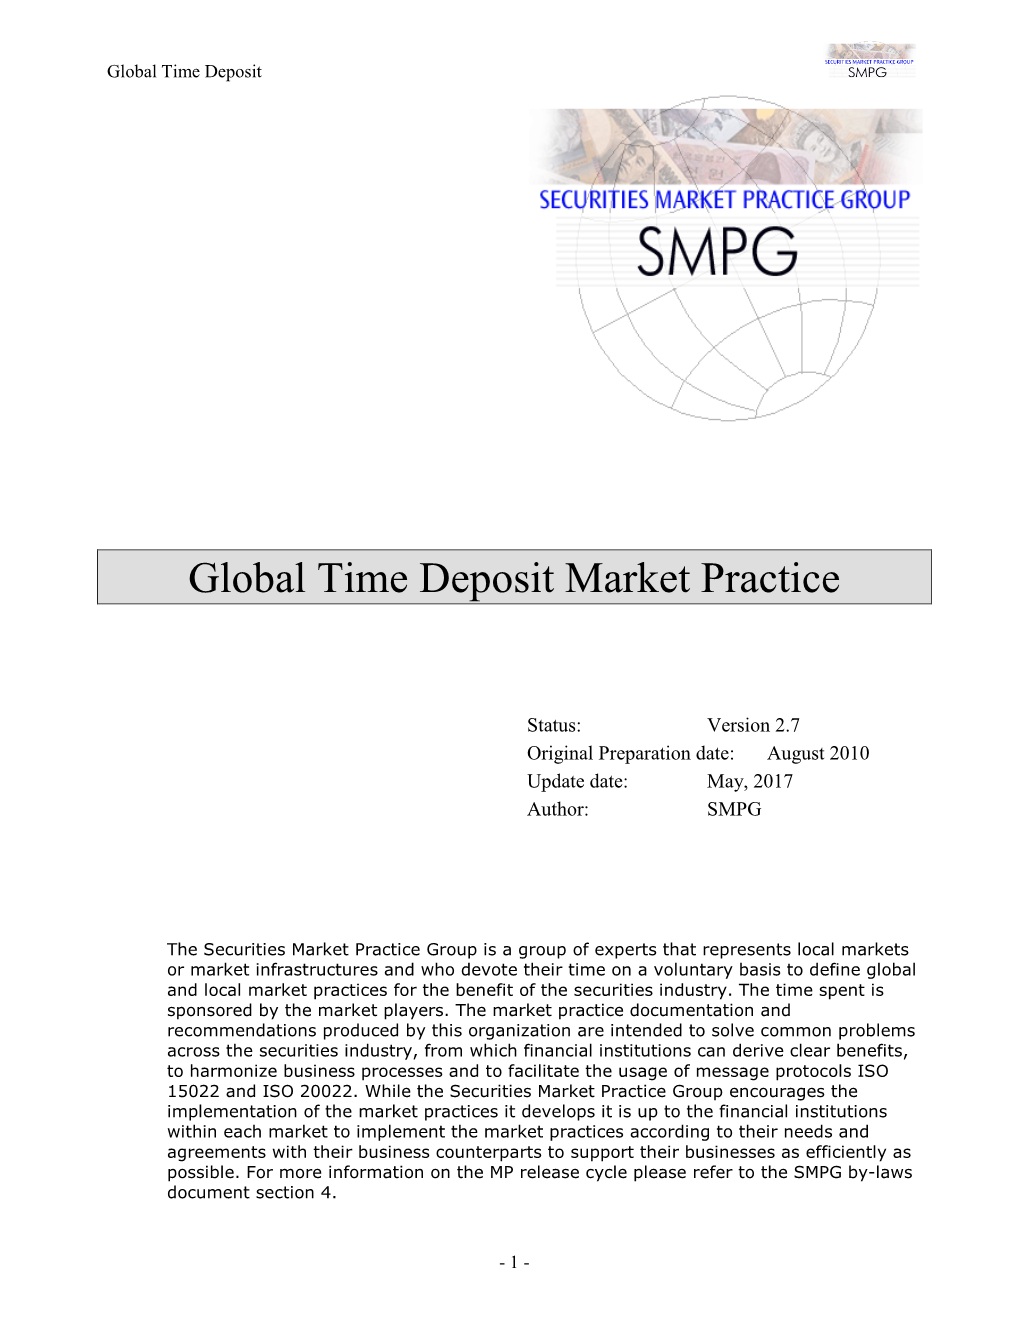 Global Time Deposit Market Practice